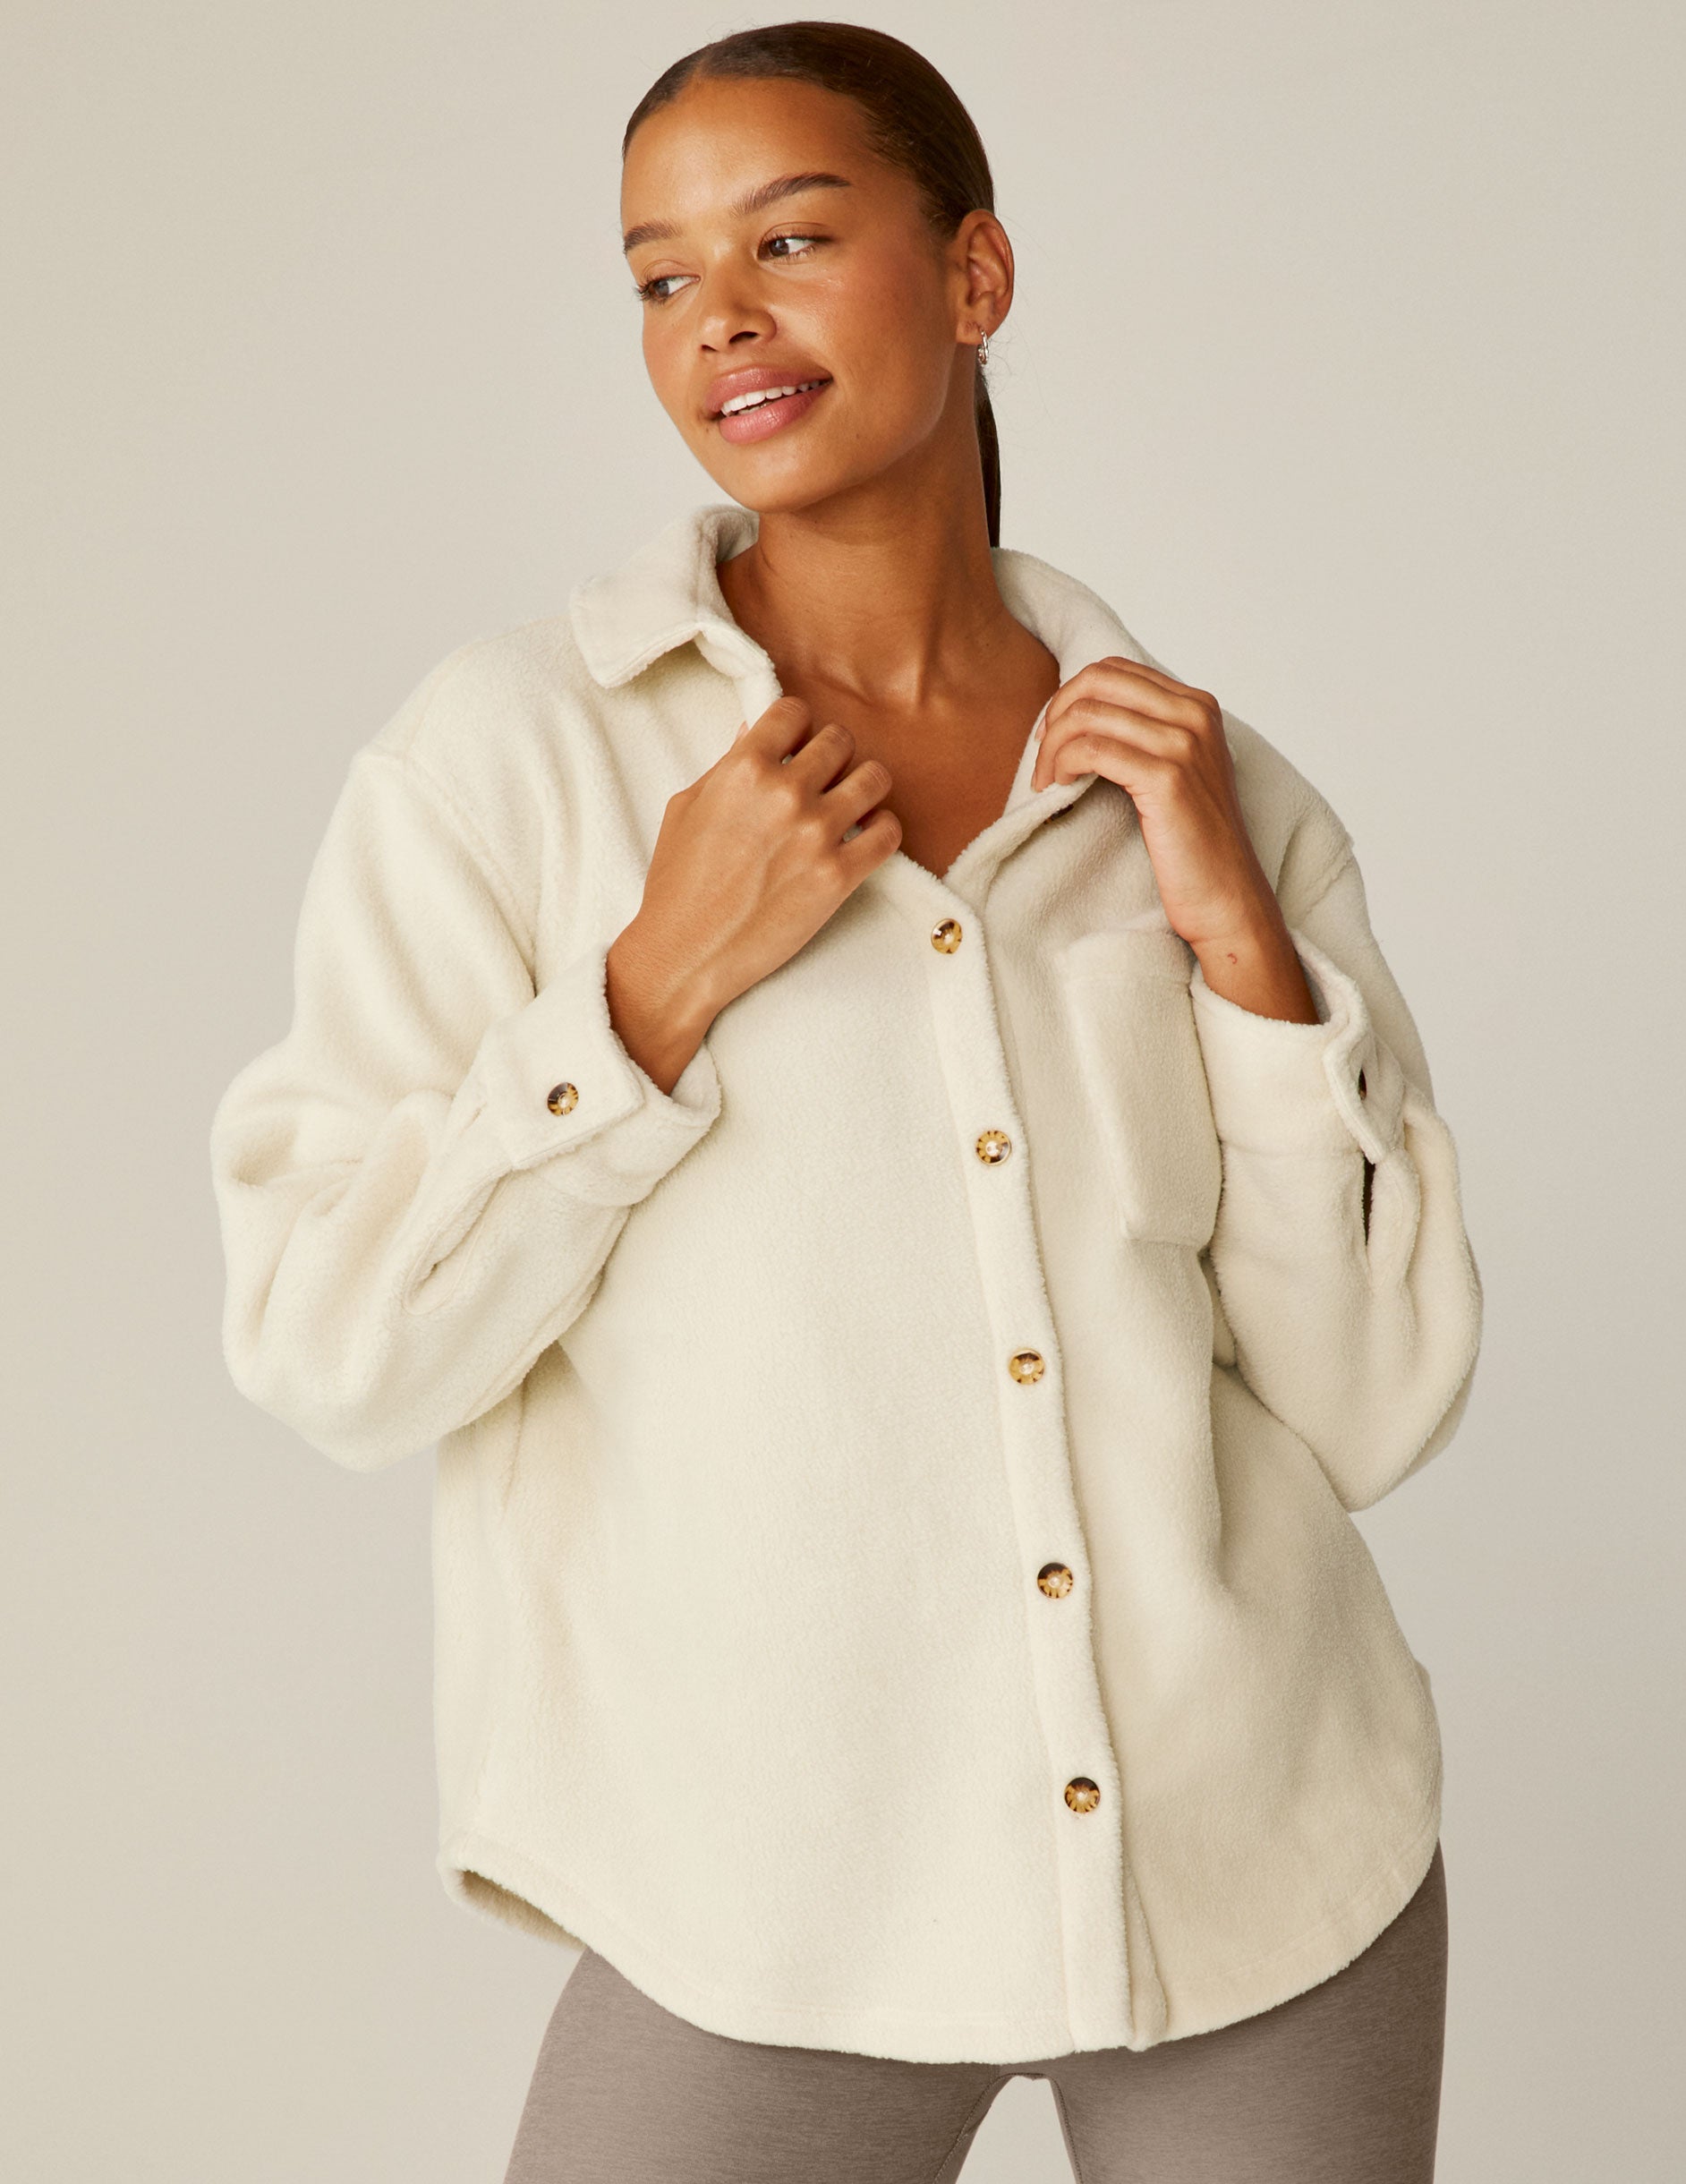 white fleece button up shirt jacket. 